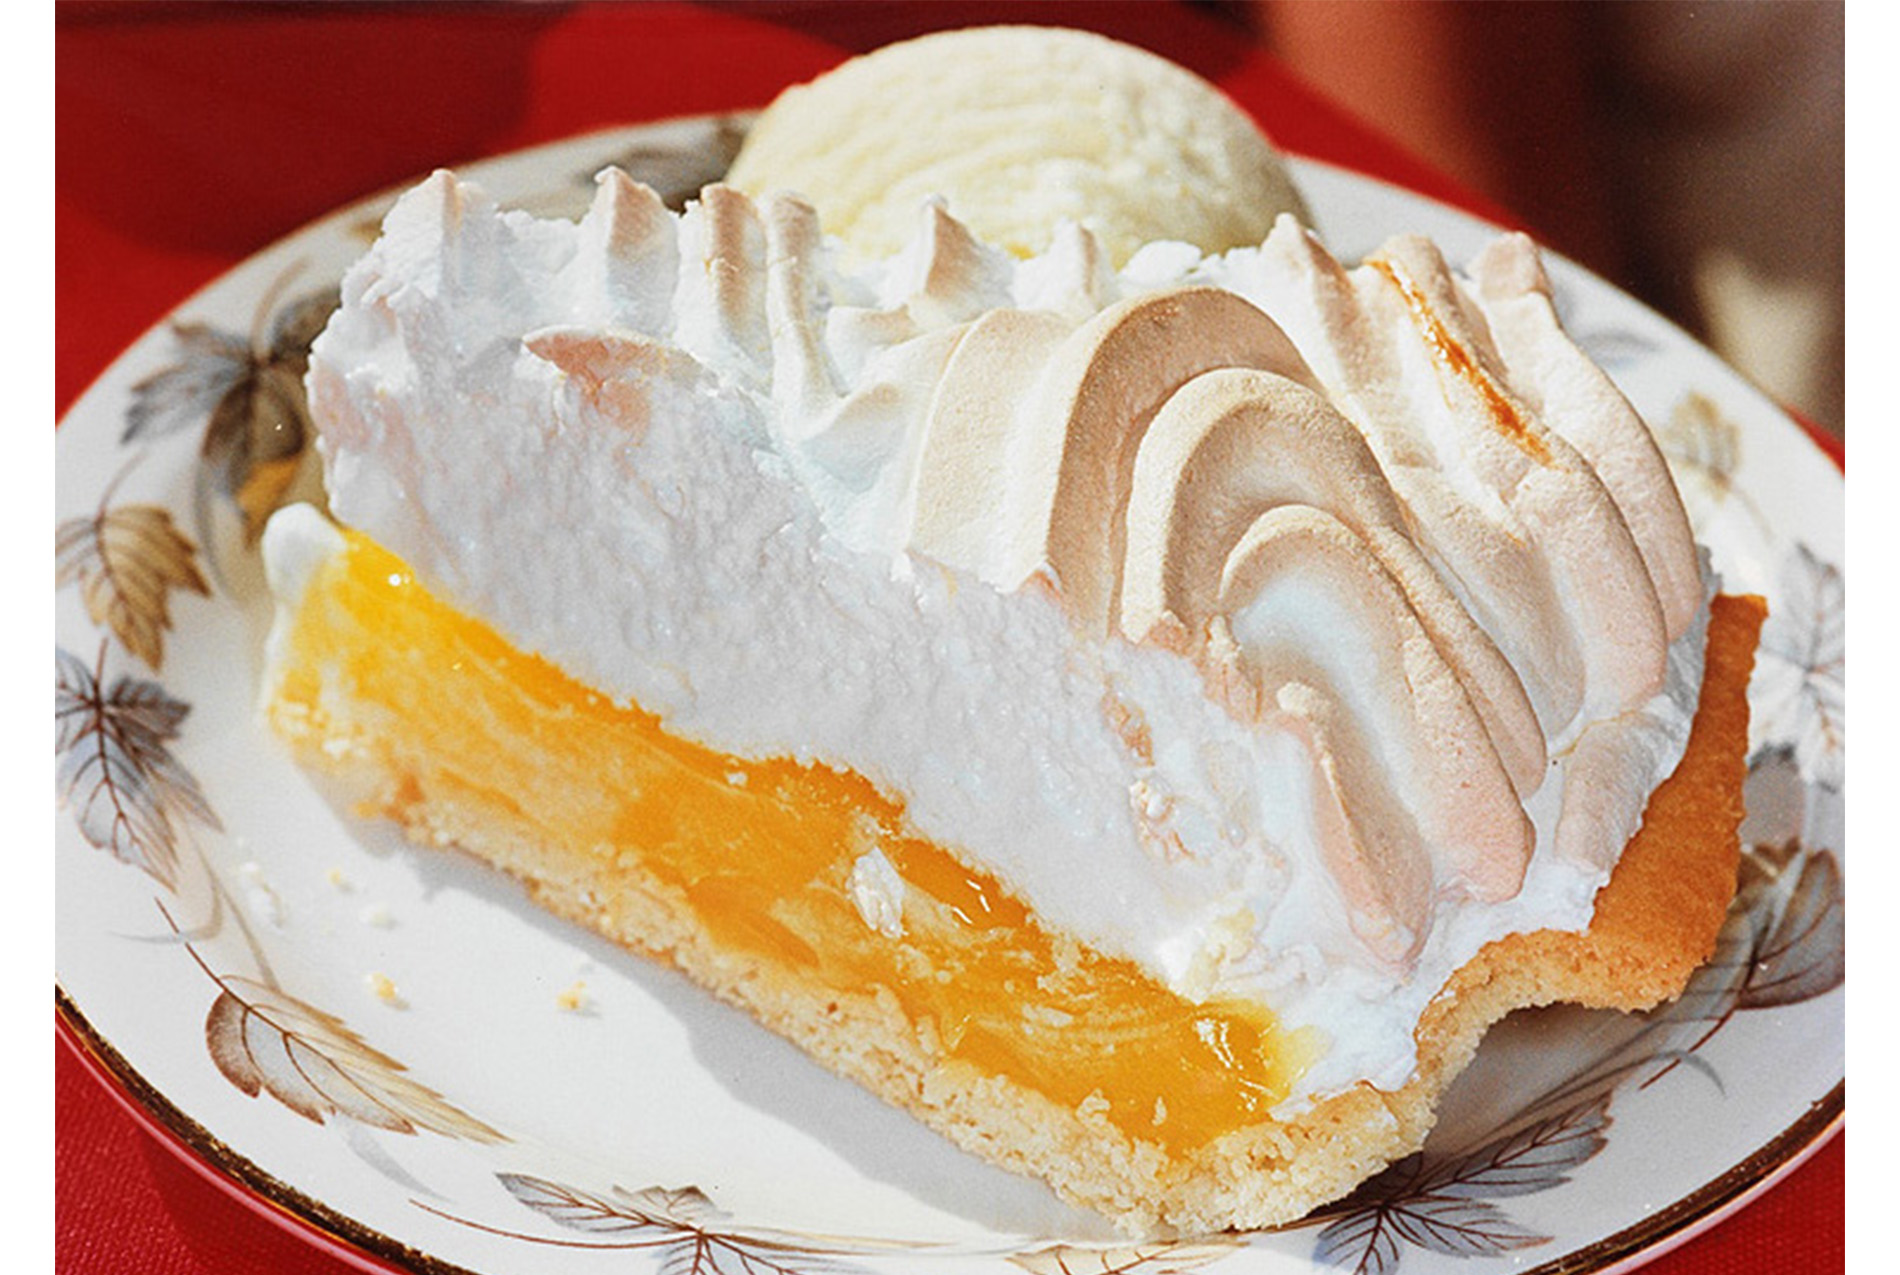 close-up of a slice of lemon meringue pie